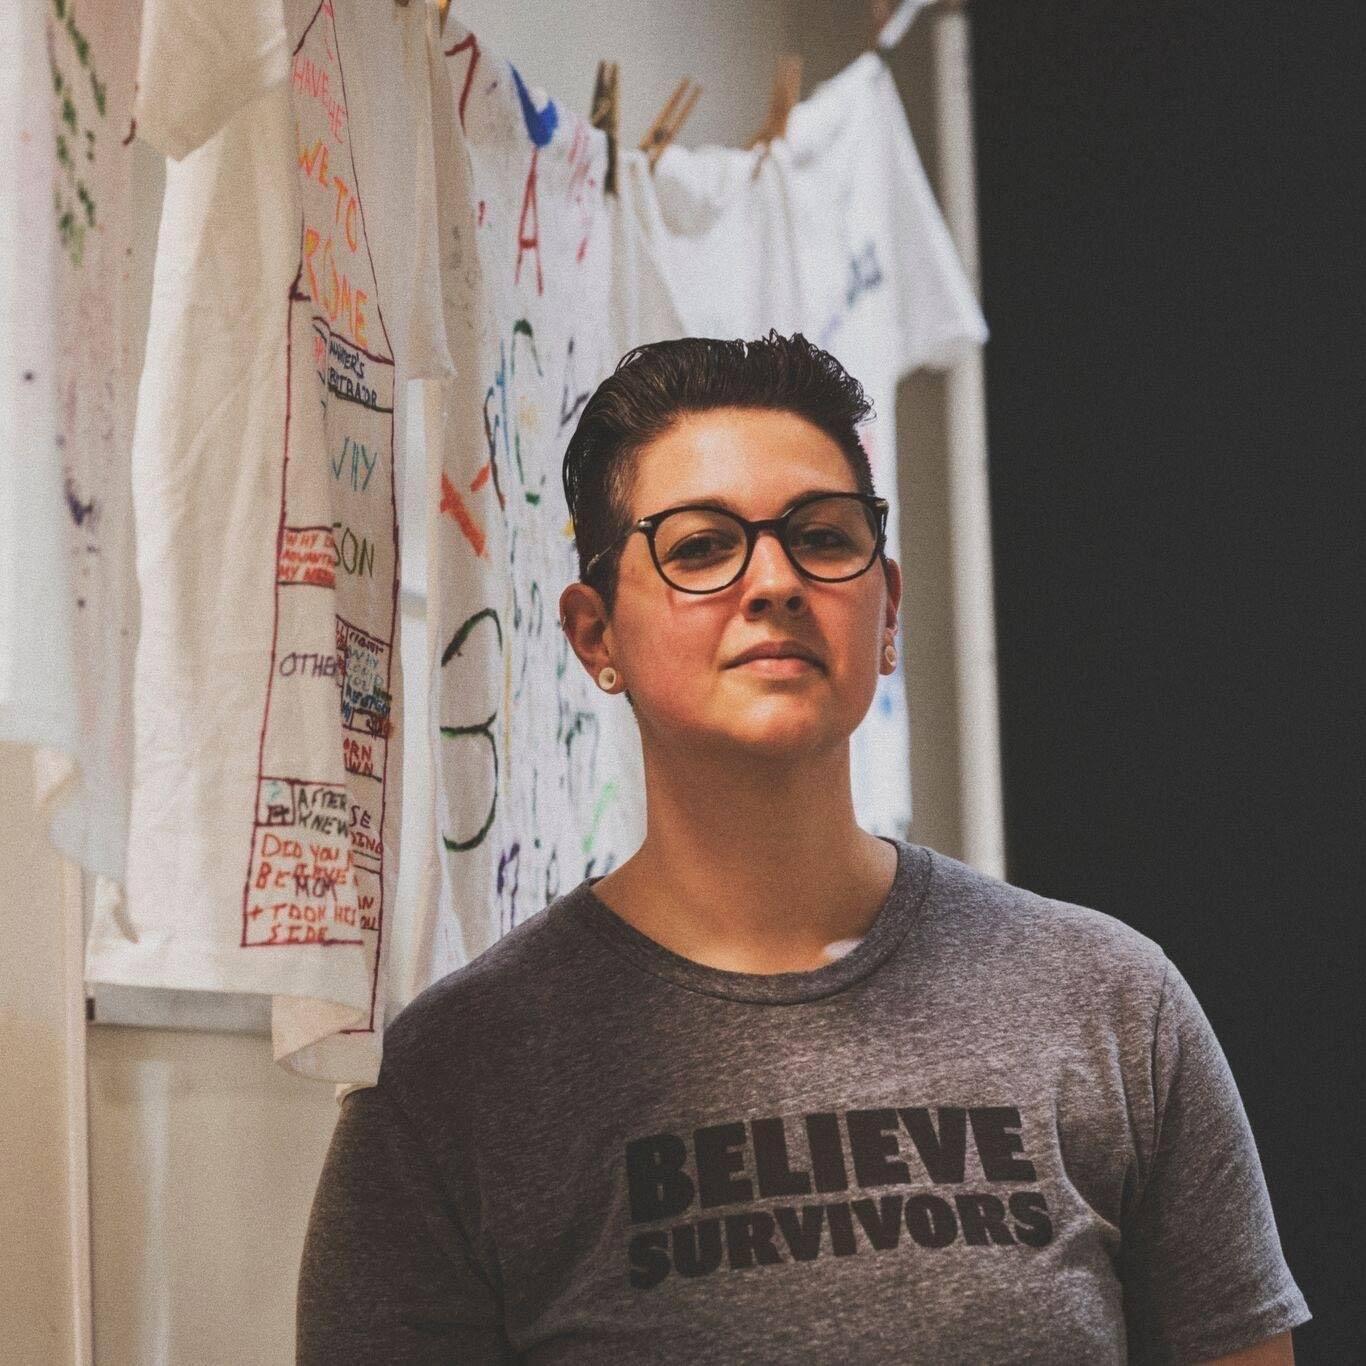 Alex Dukat next to an awareness clothesline project and a T-shirt reading Believe Survivors